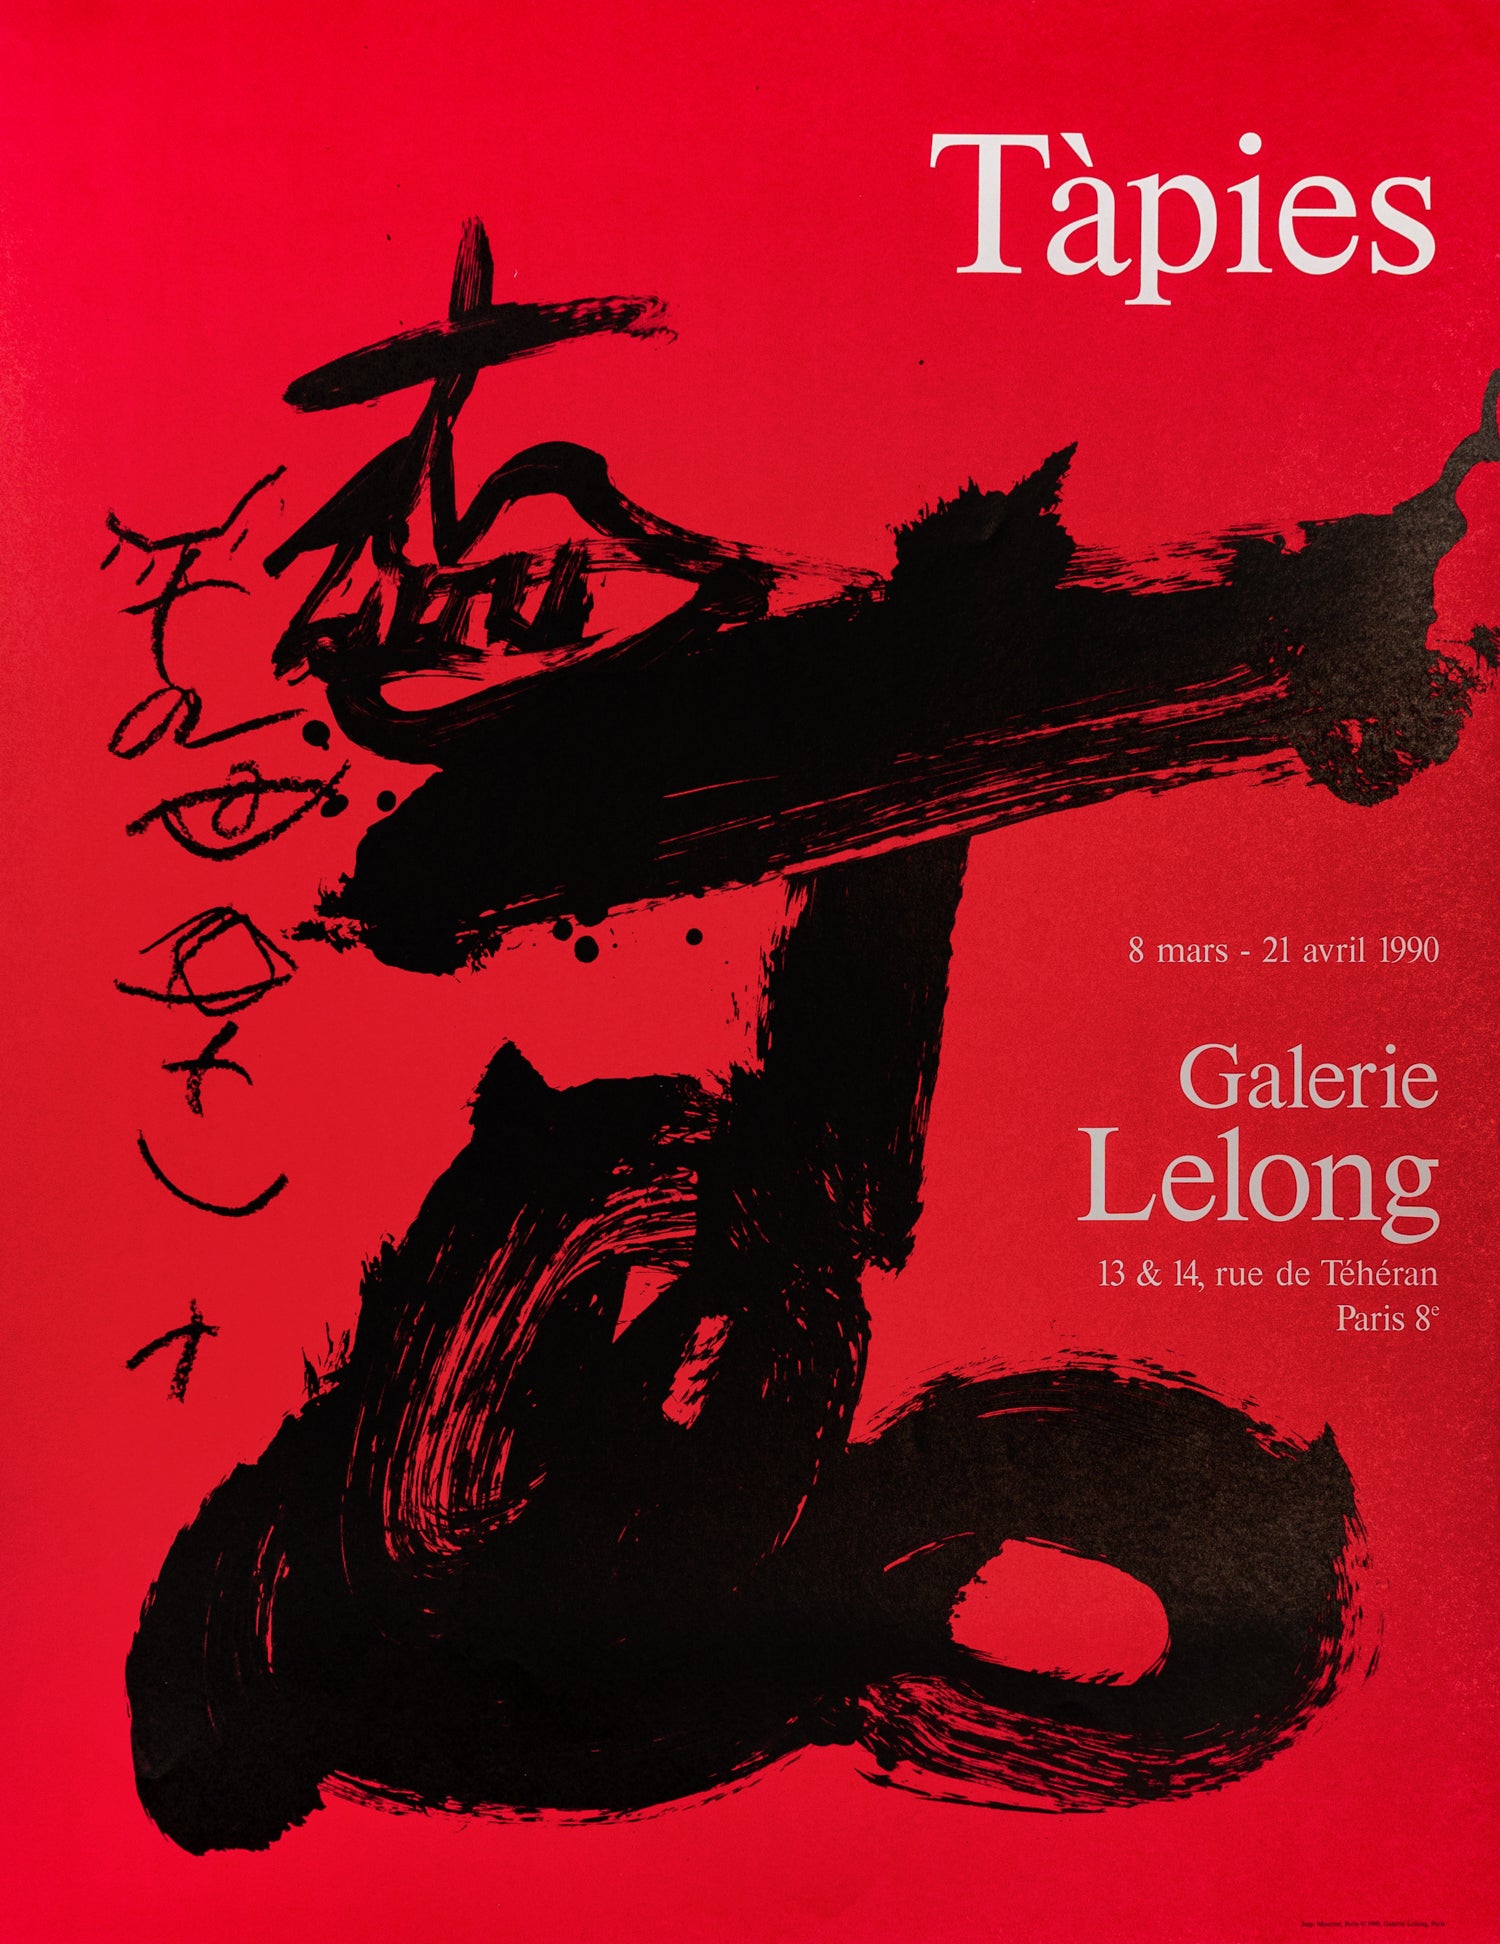 Galerie Lelong - by Antoni Tapies, 1990 - Mourlot Editions - Fine_Art - Poster - Lithograph - Wall Art - Vintage - Prints - Original